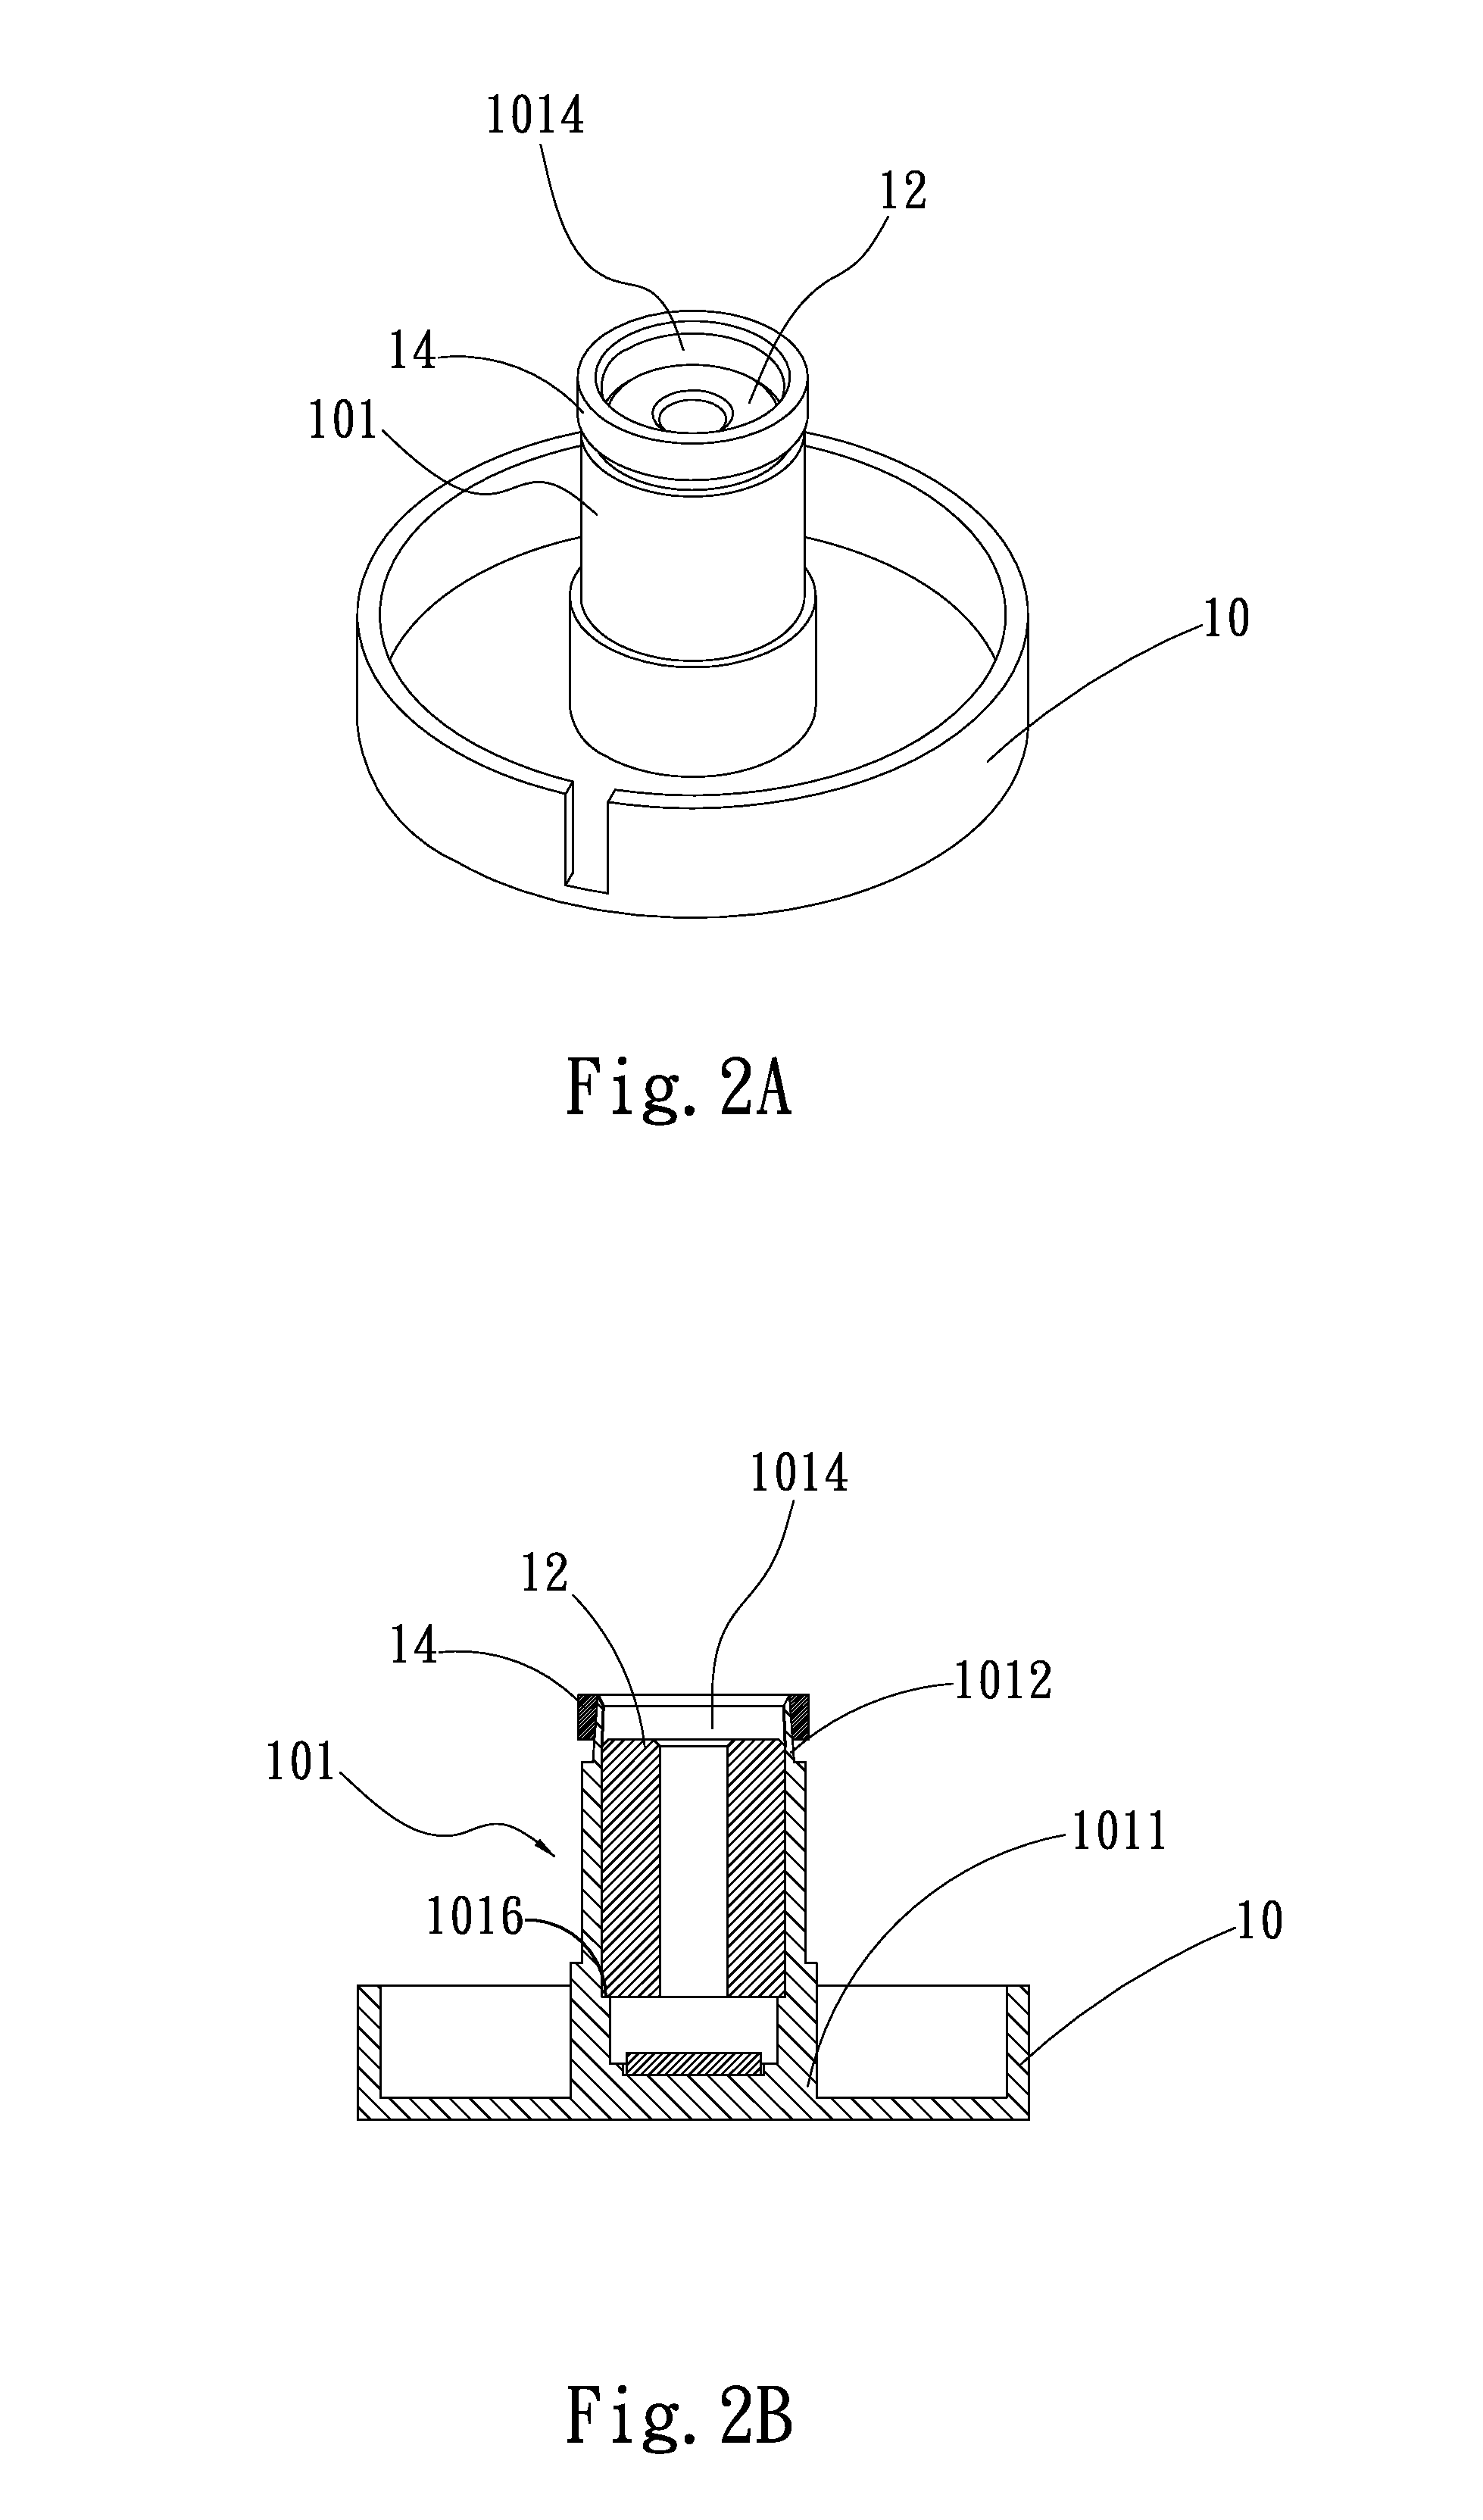 Fan bearing retaining structure